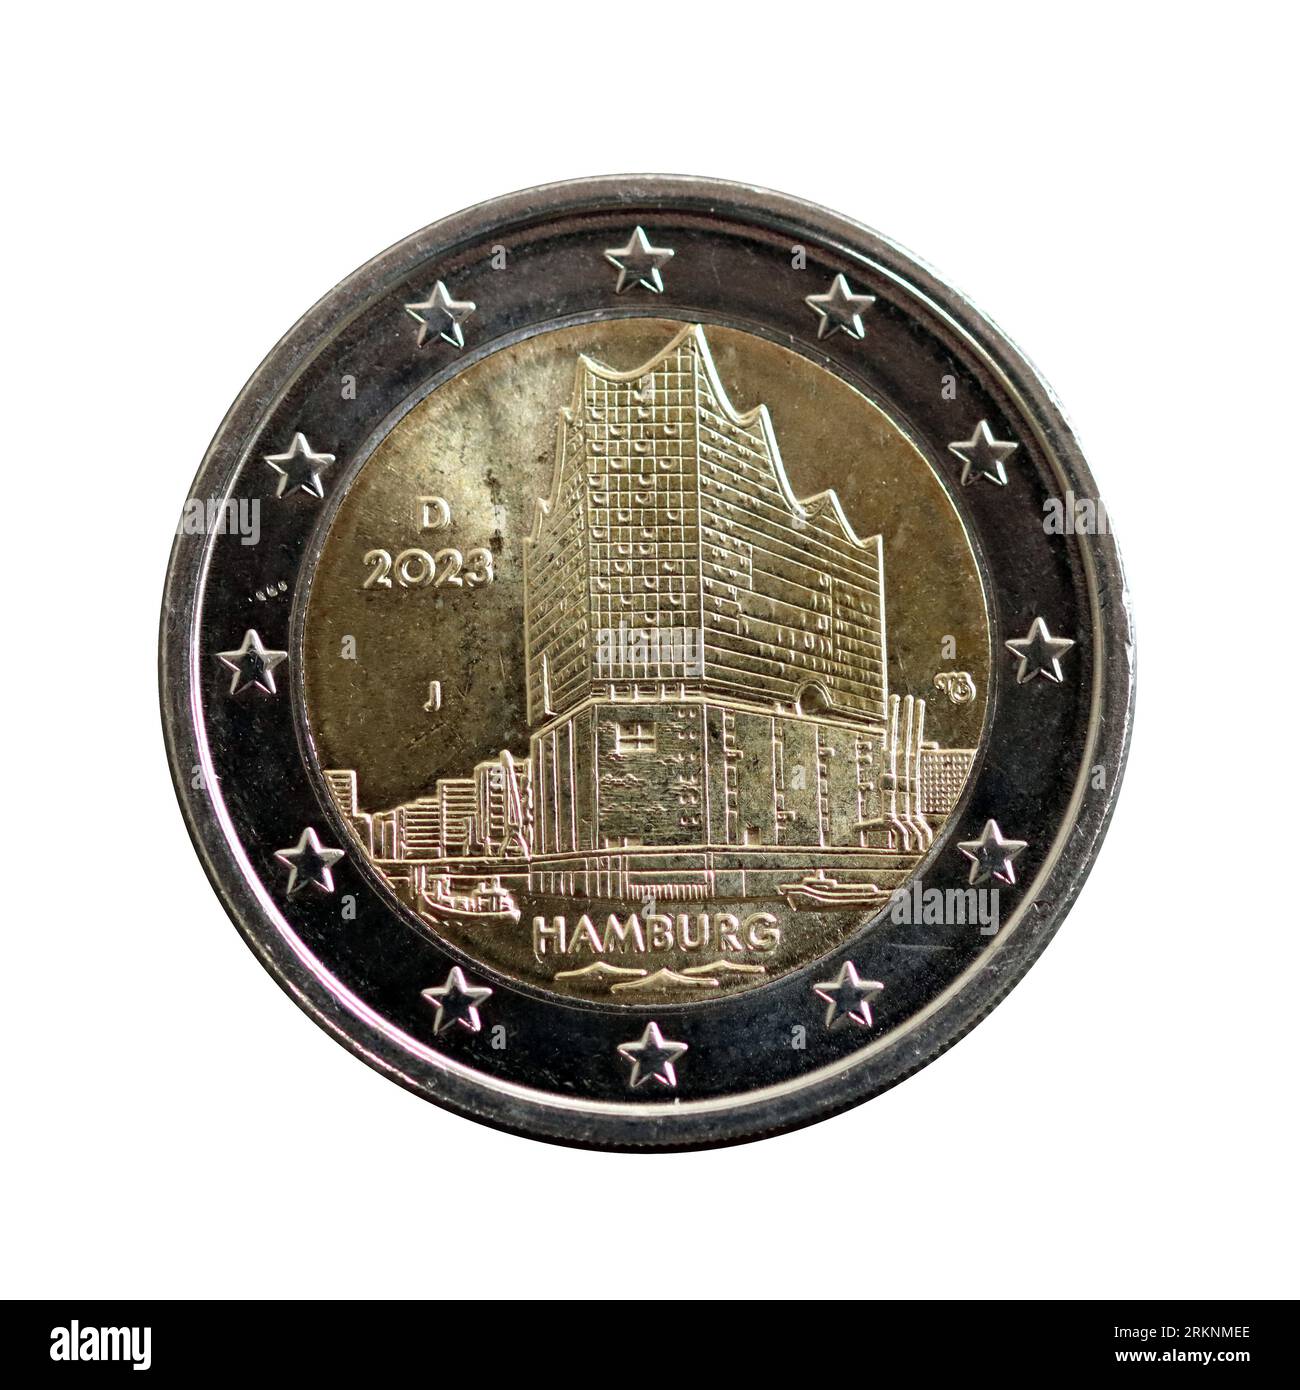 Elbphilharmonie Hamburg su una moneta commemorativa da 2 euro, Germania, Amburgo Foto Stock